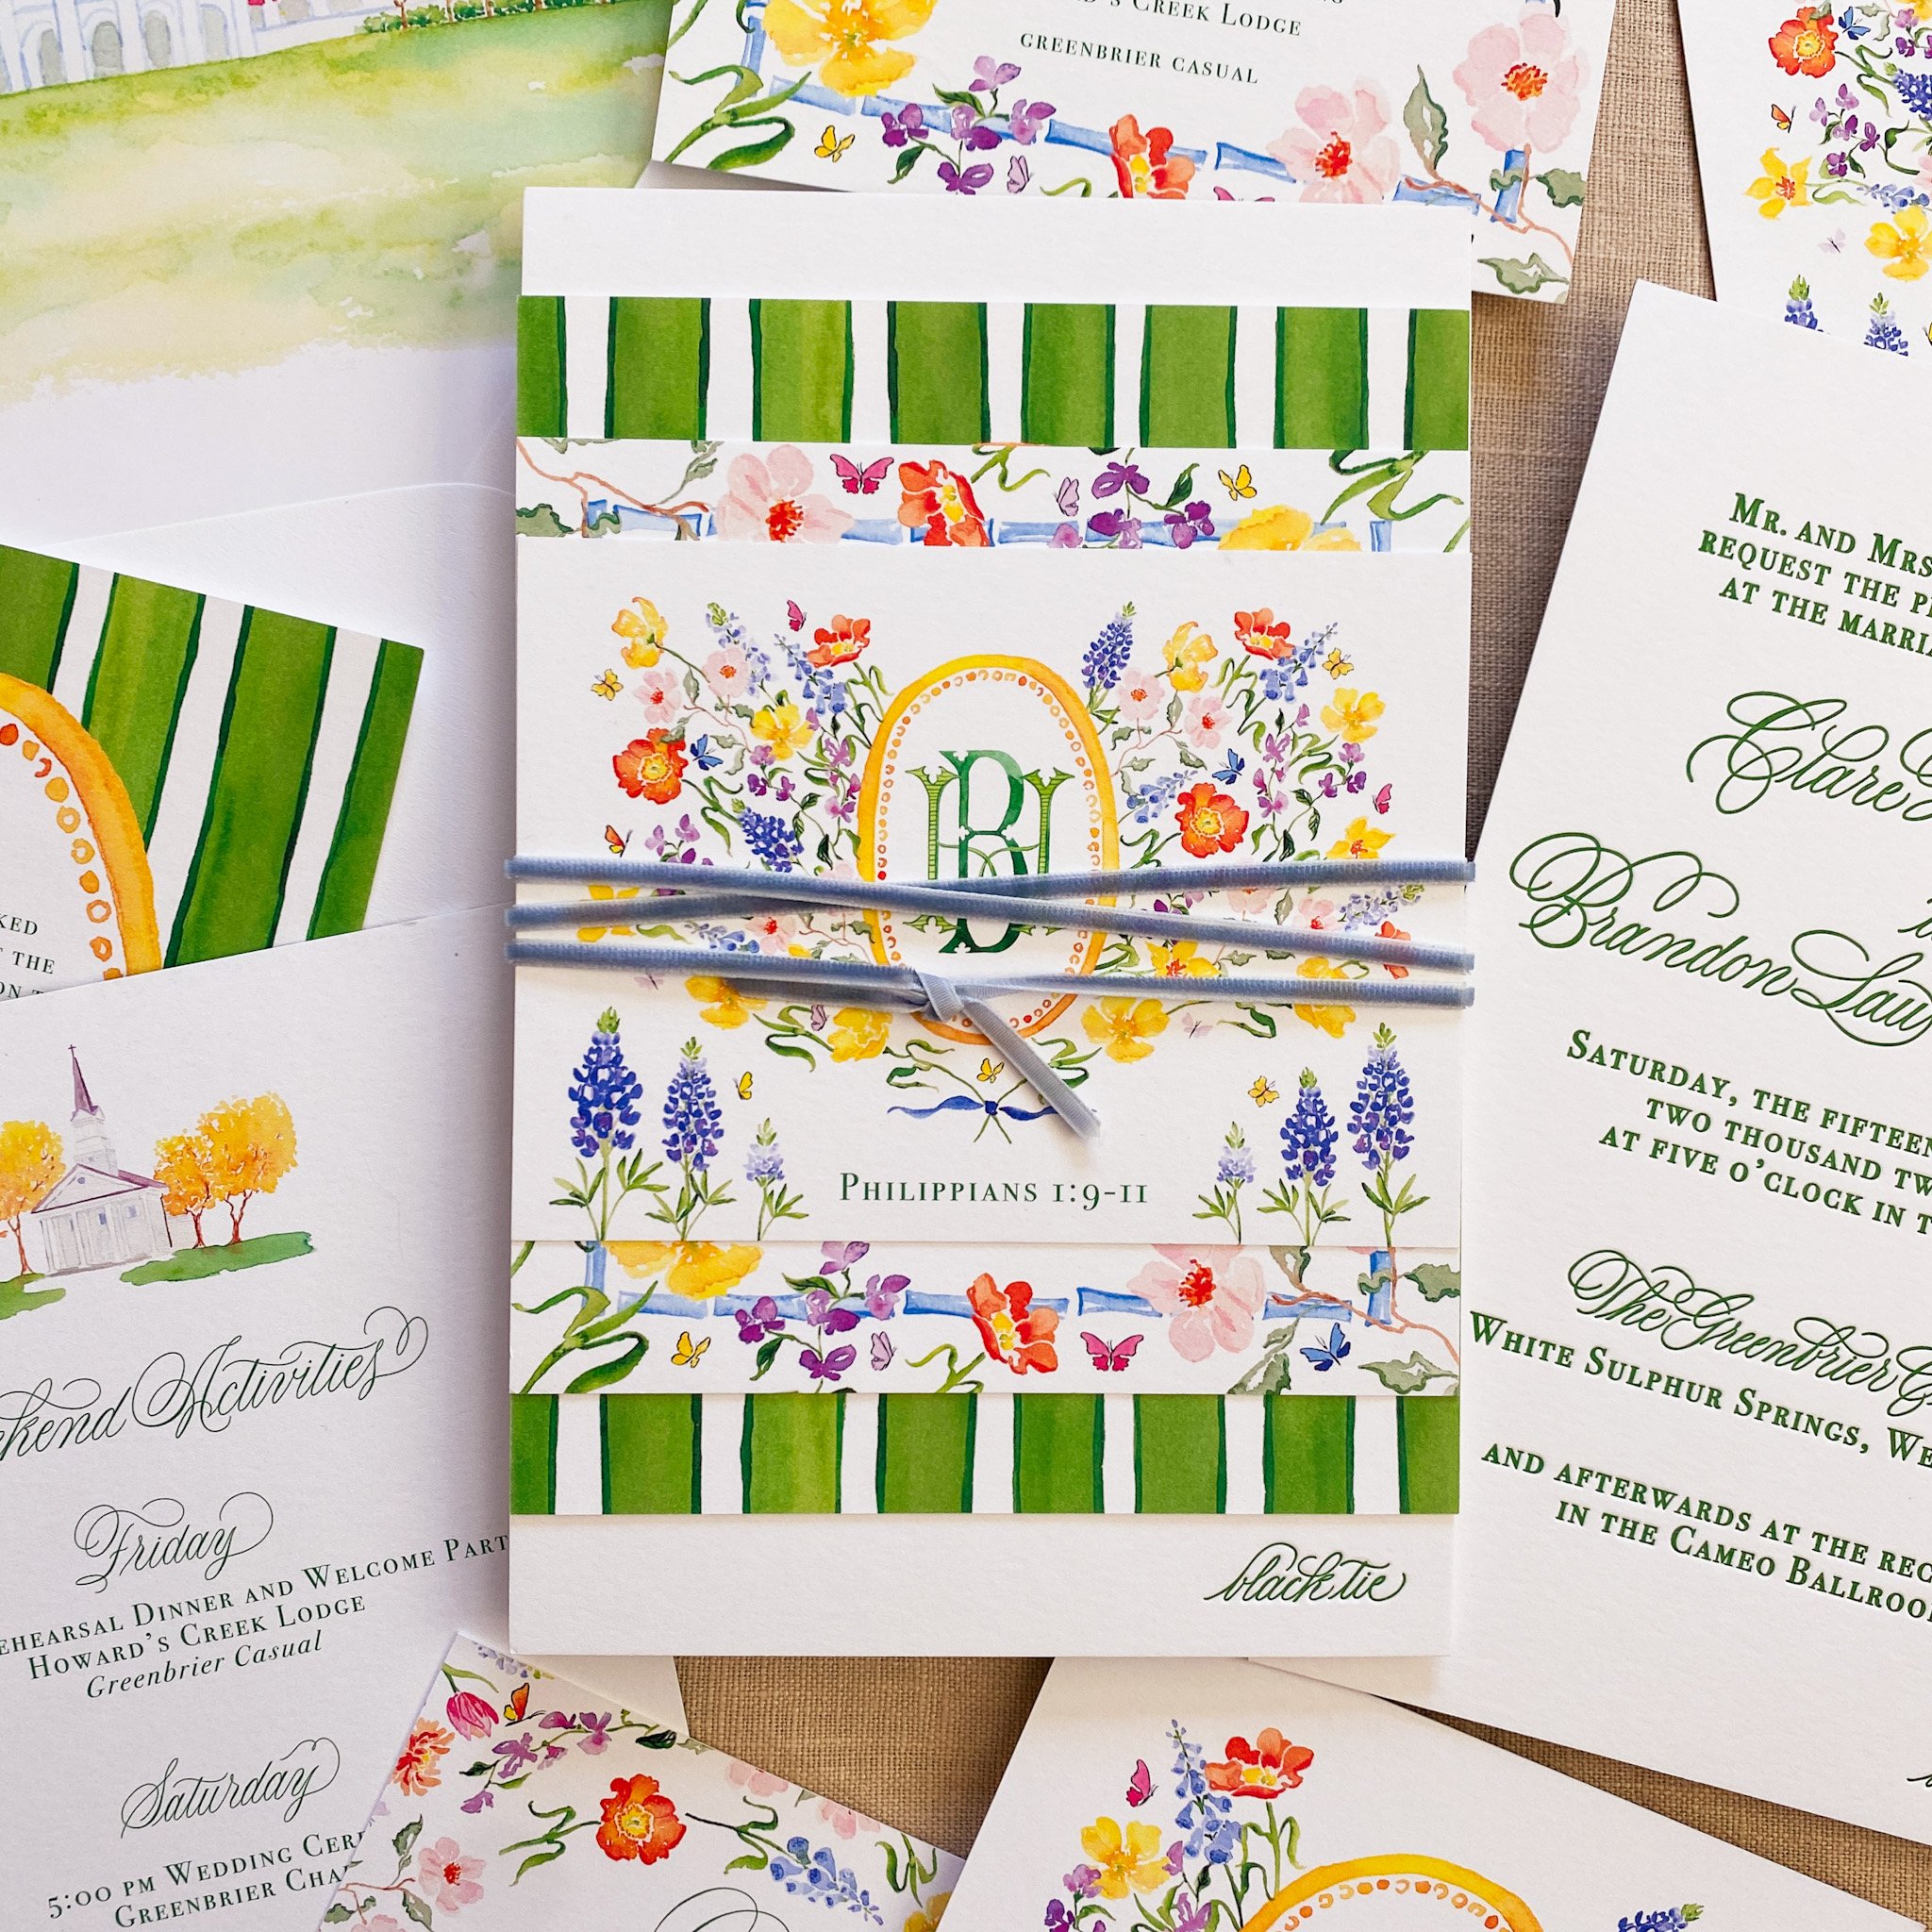 greenbrier_custom_wedding_invitations.jpg